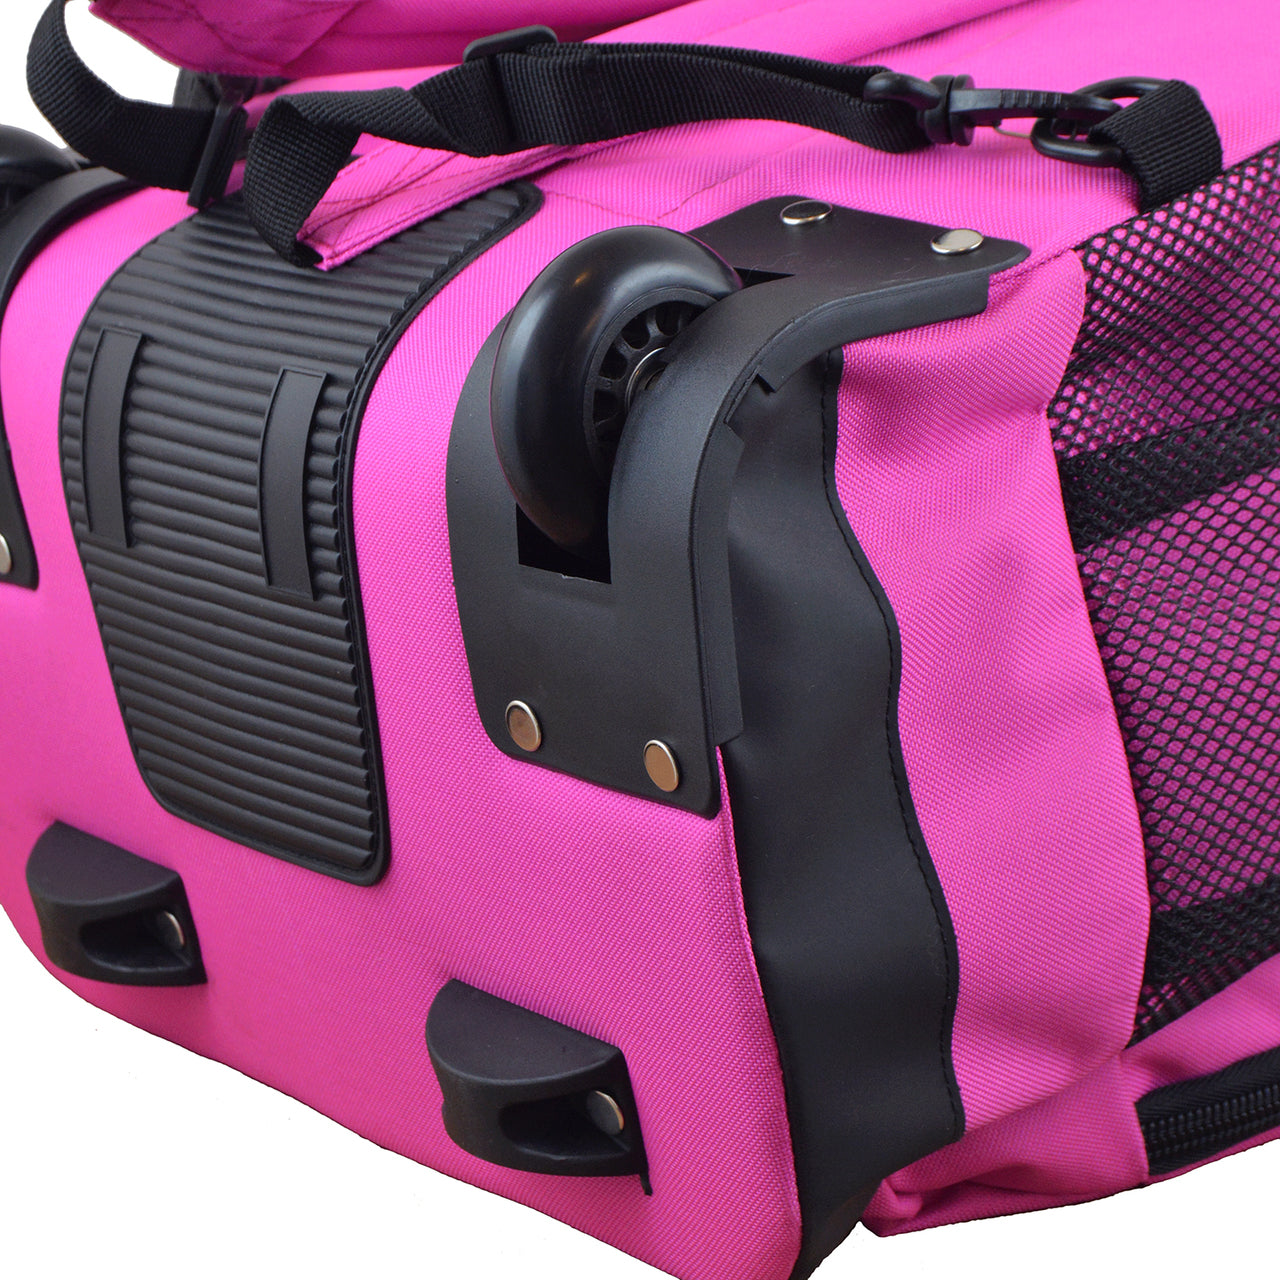 South Dakota Premium Wheeled Backpack in Pink